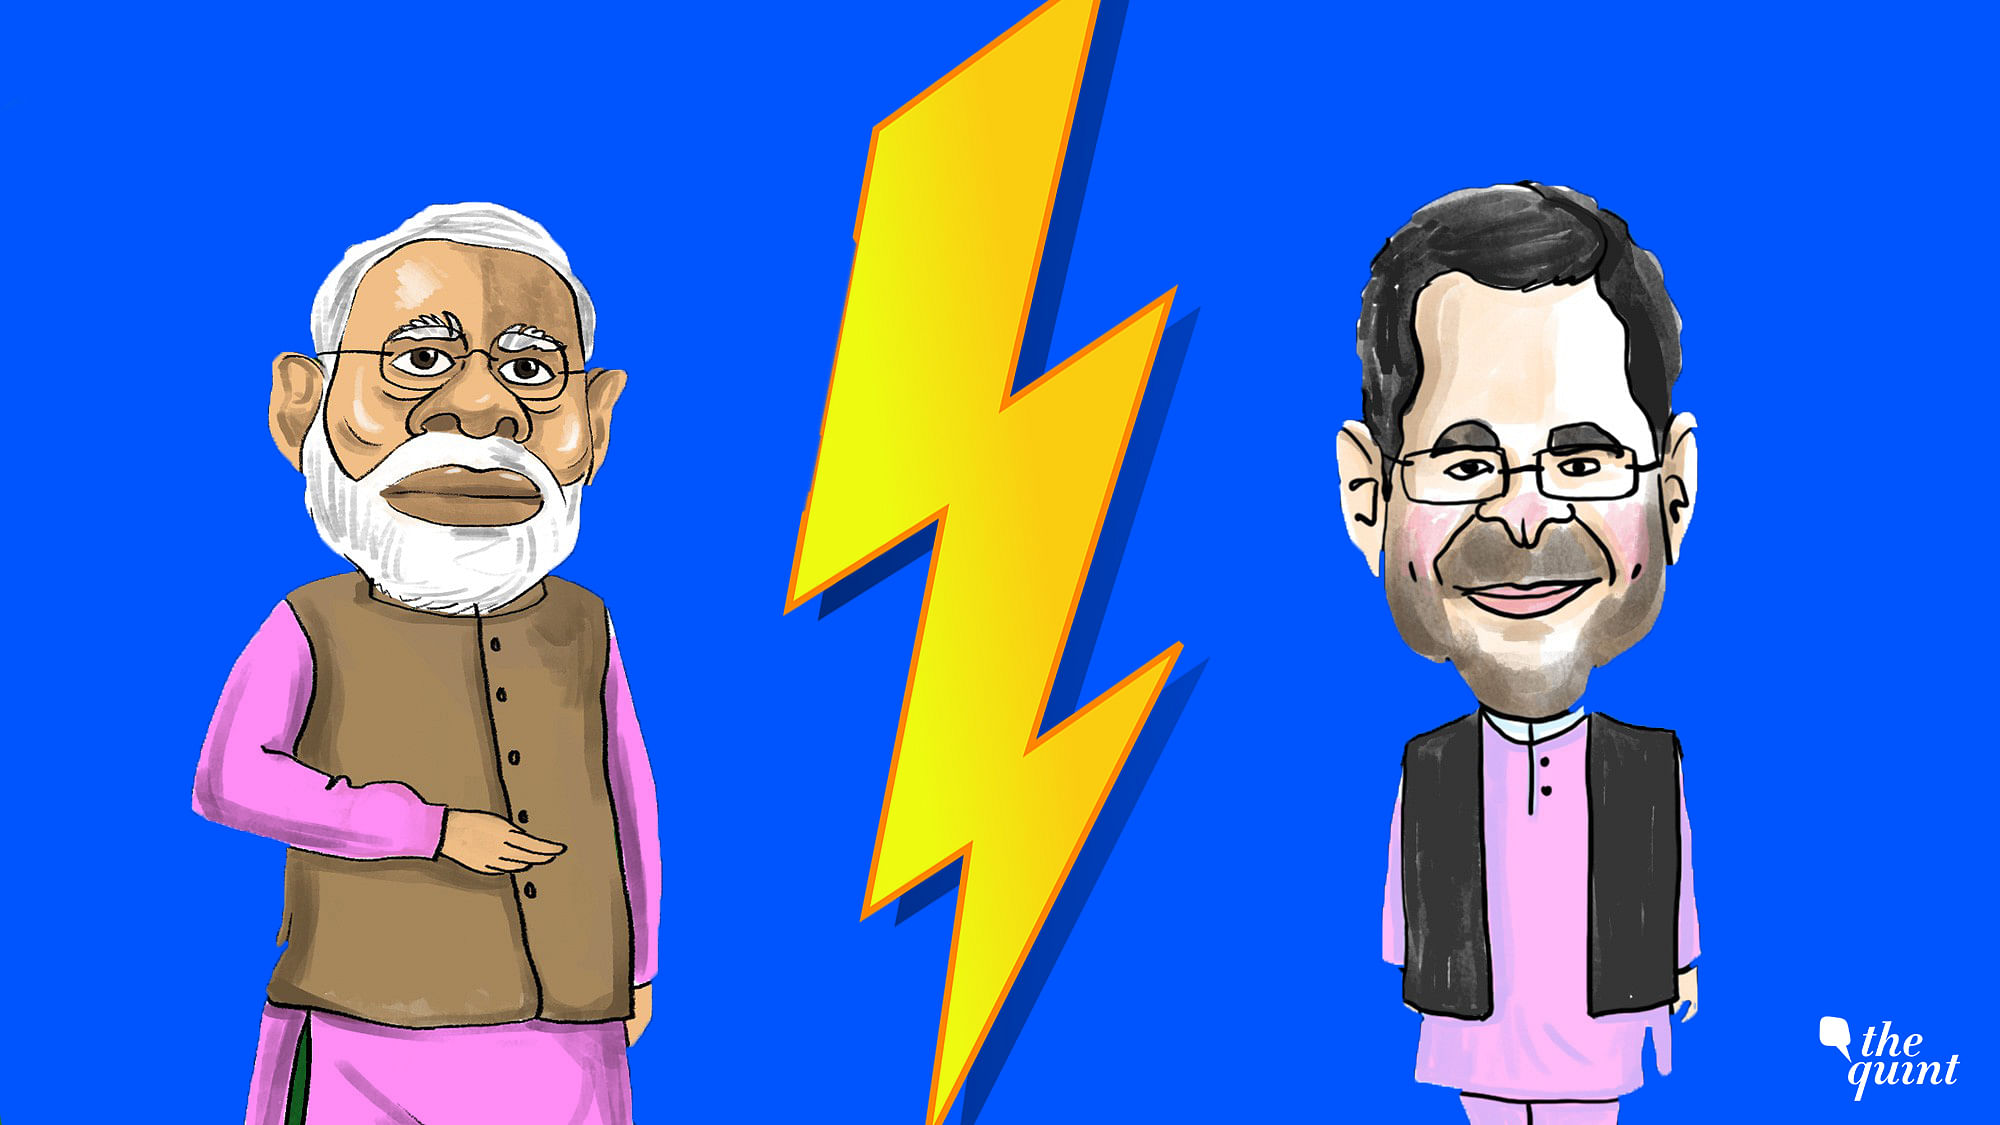 Artistic impressions of PM Modi and Rahul Gandhi used for representational purposes.